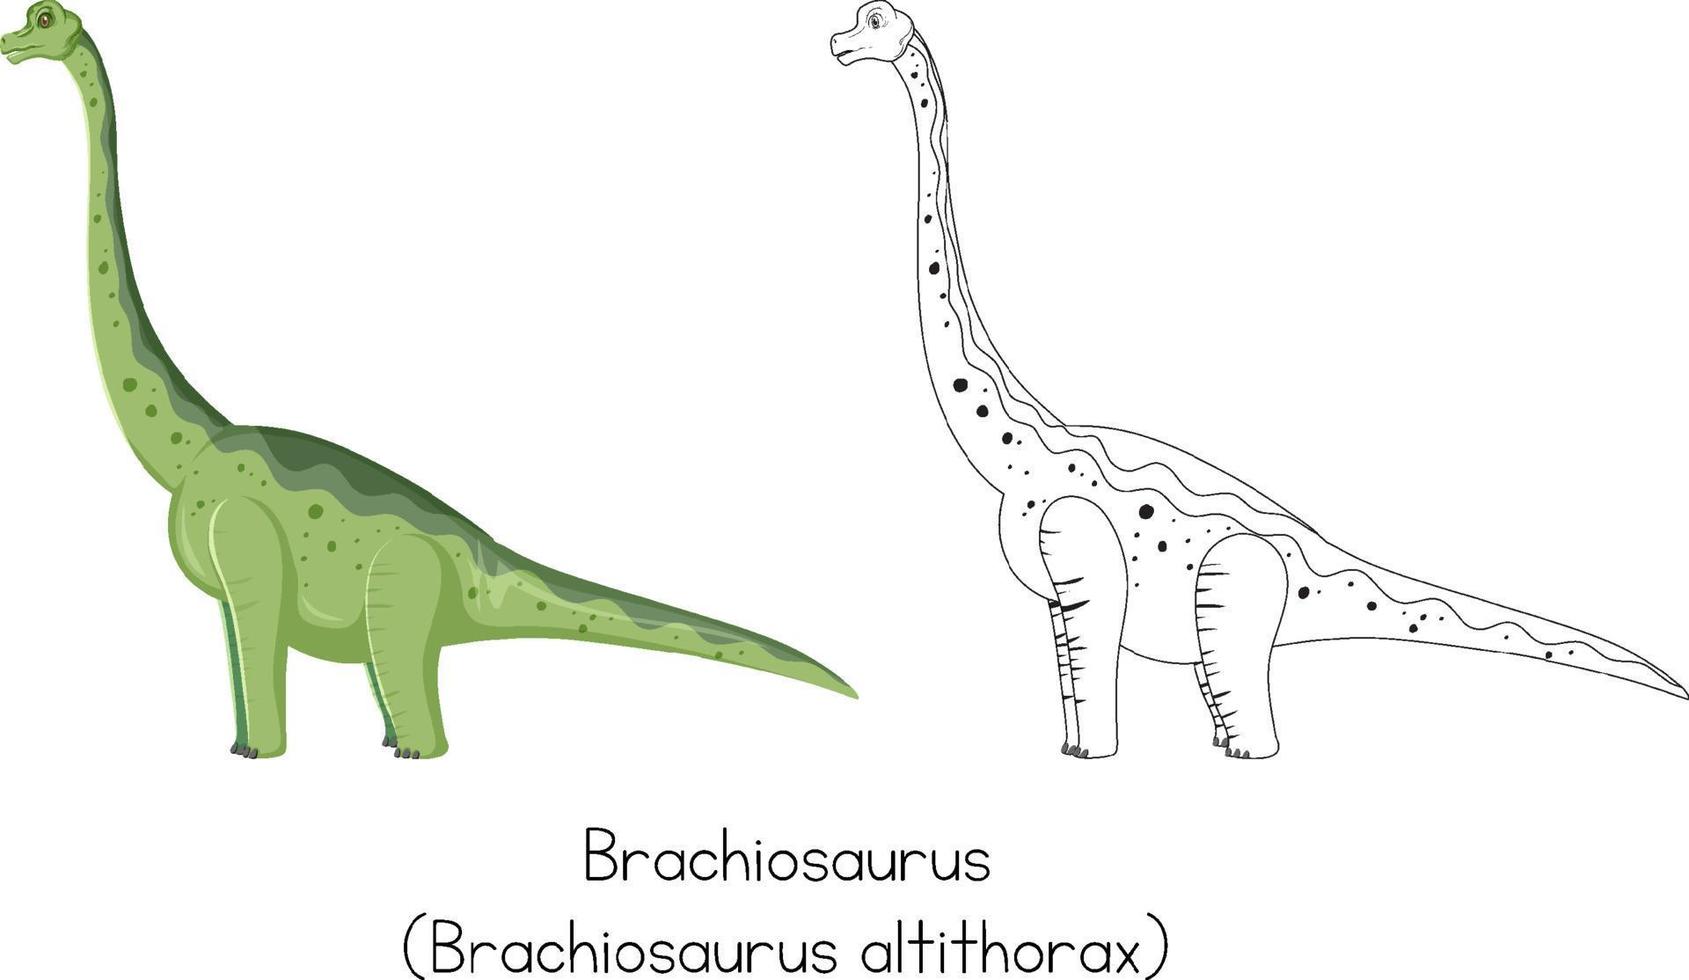 Dinosaur sketching of brachiosaurus vector